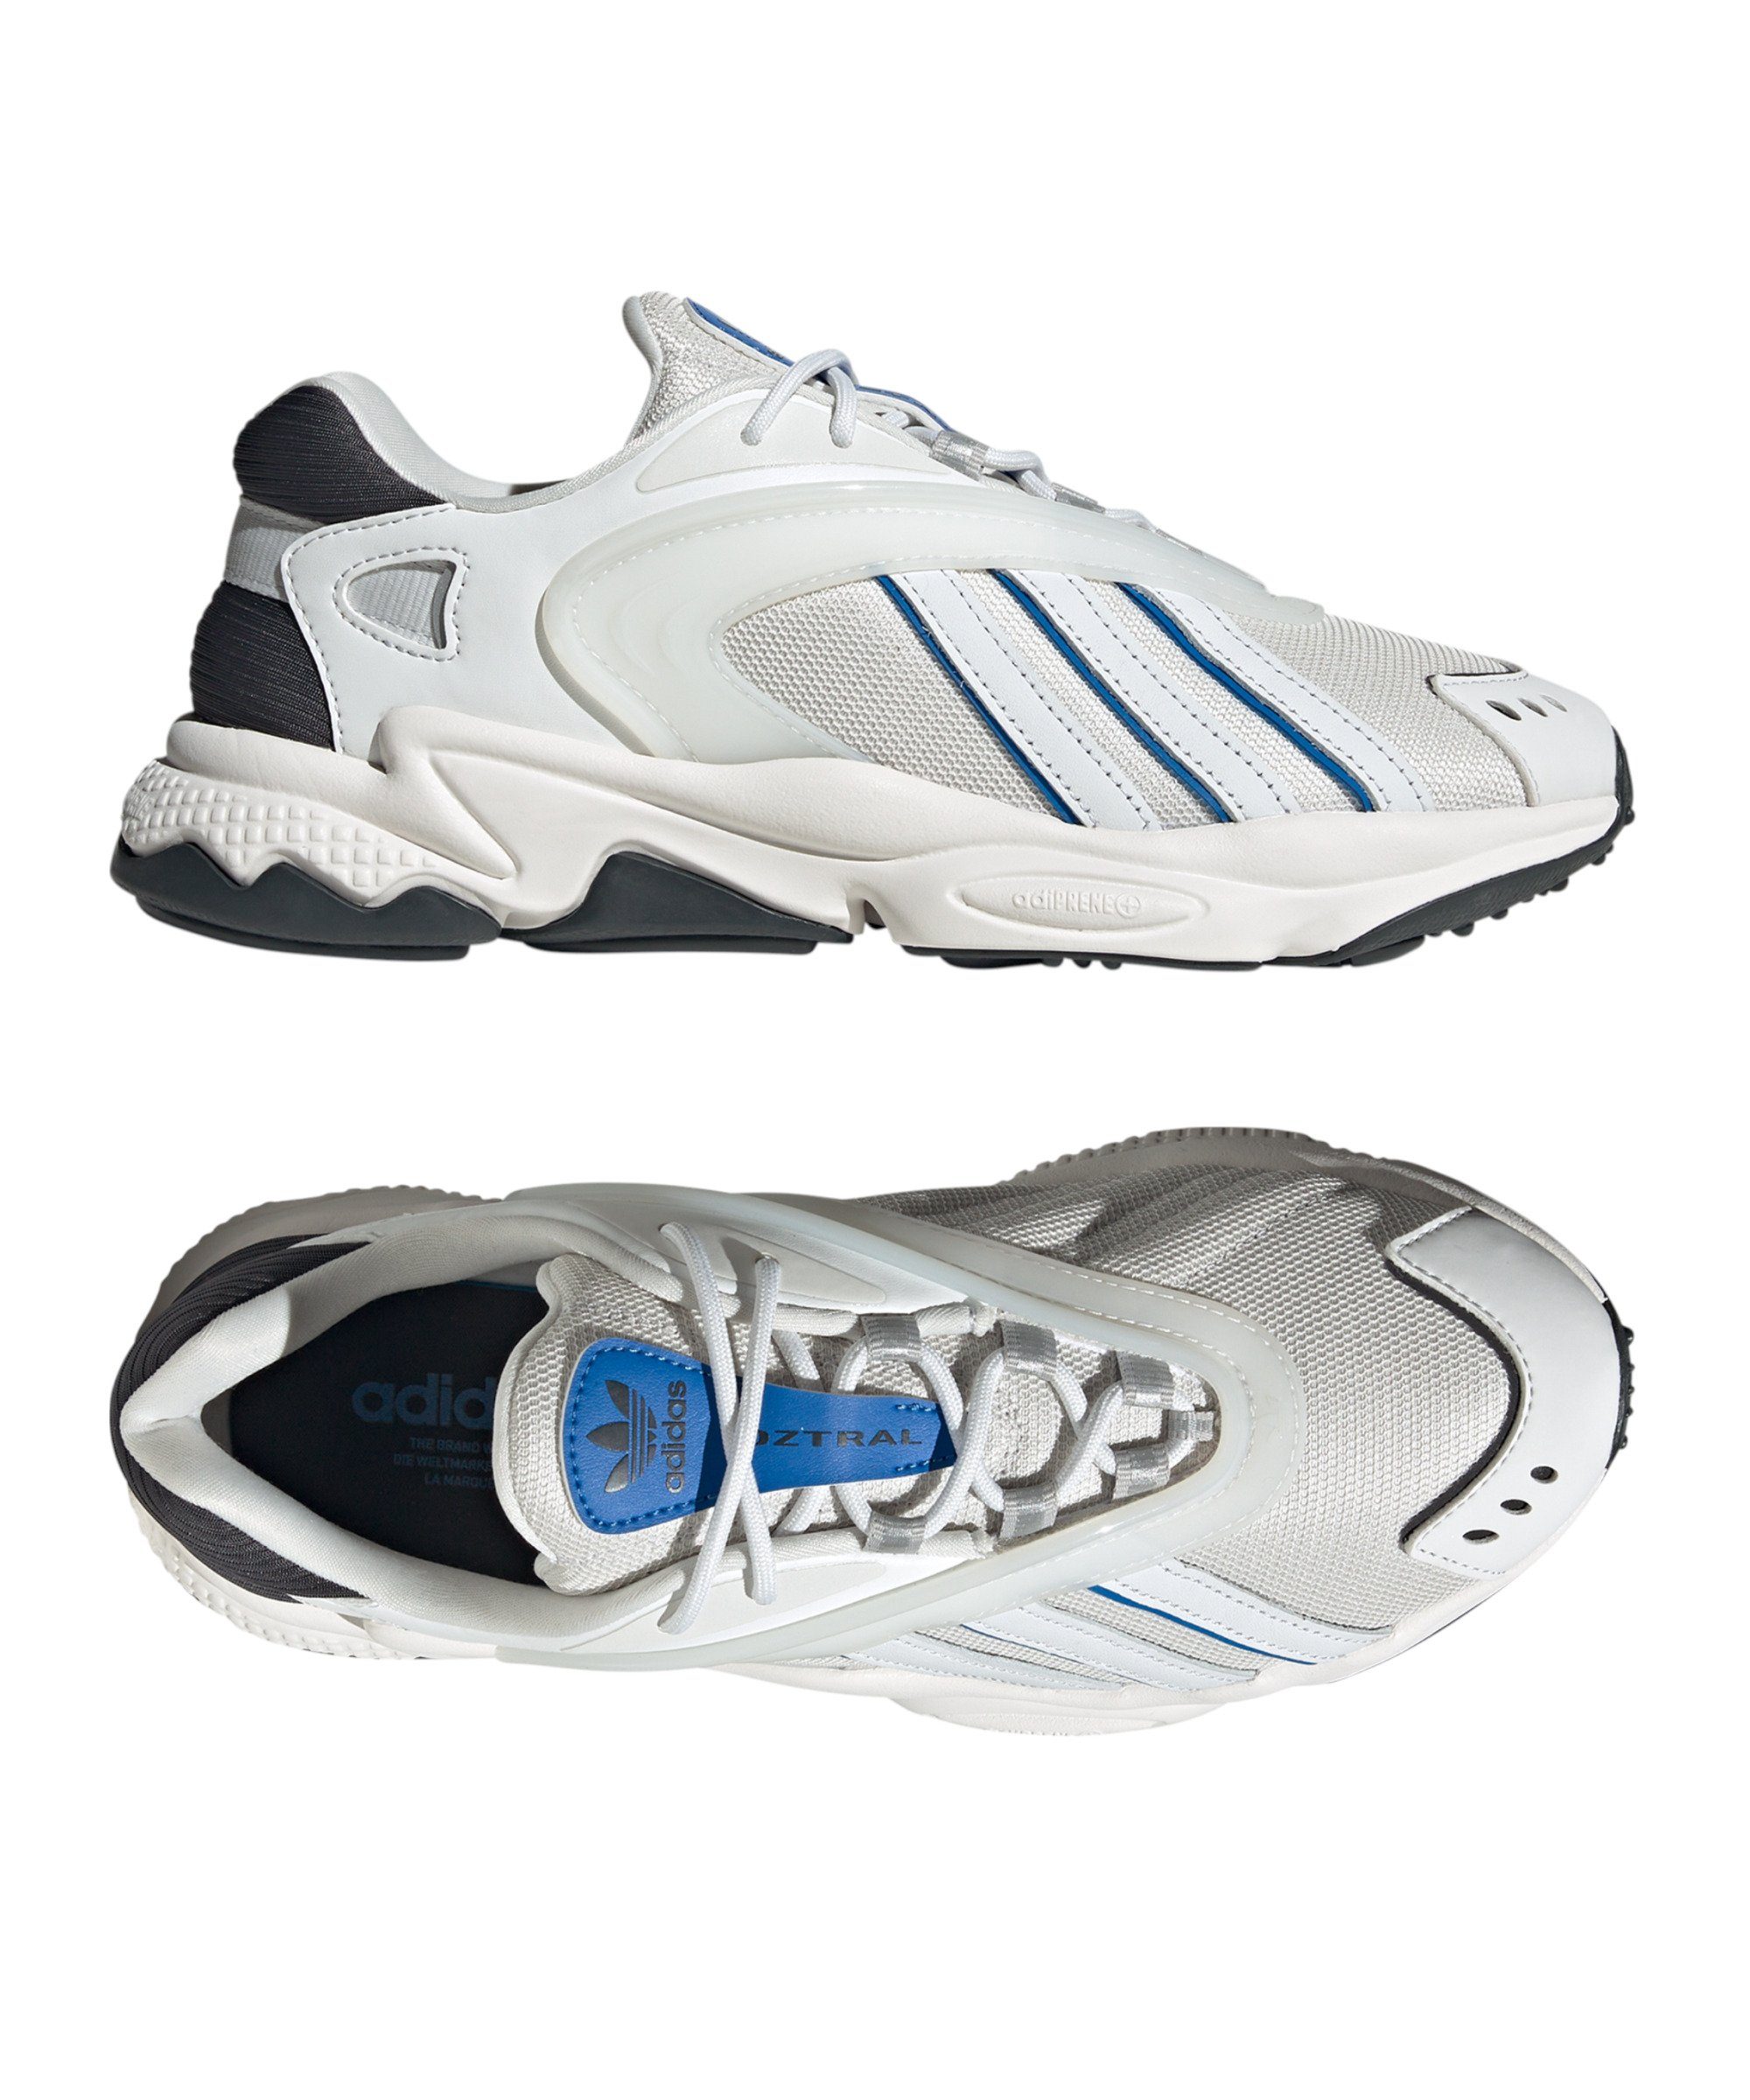 Originals adidas Oztral Sneaker weissweissblau